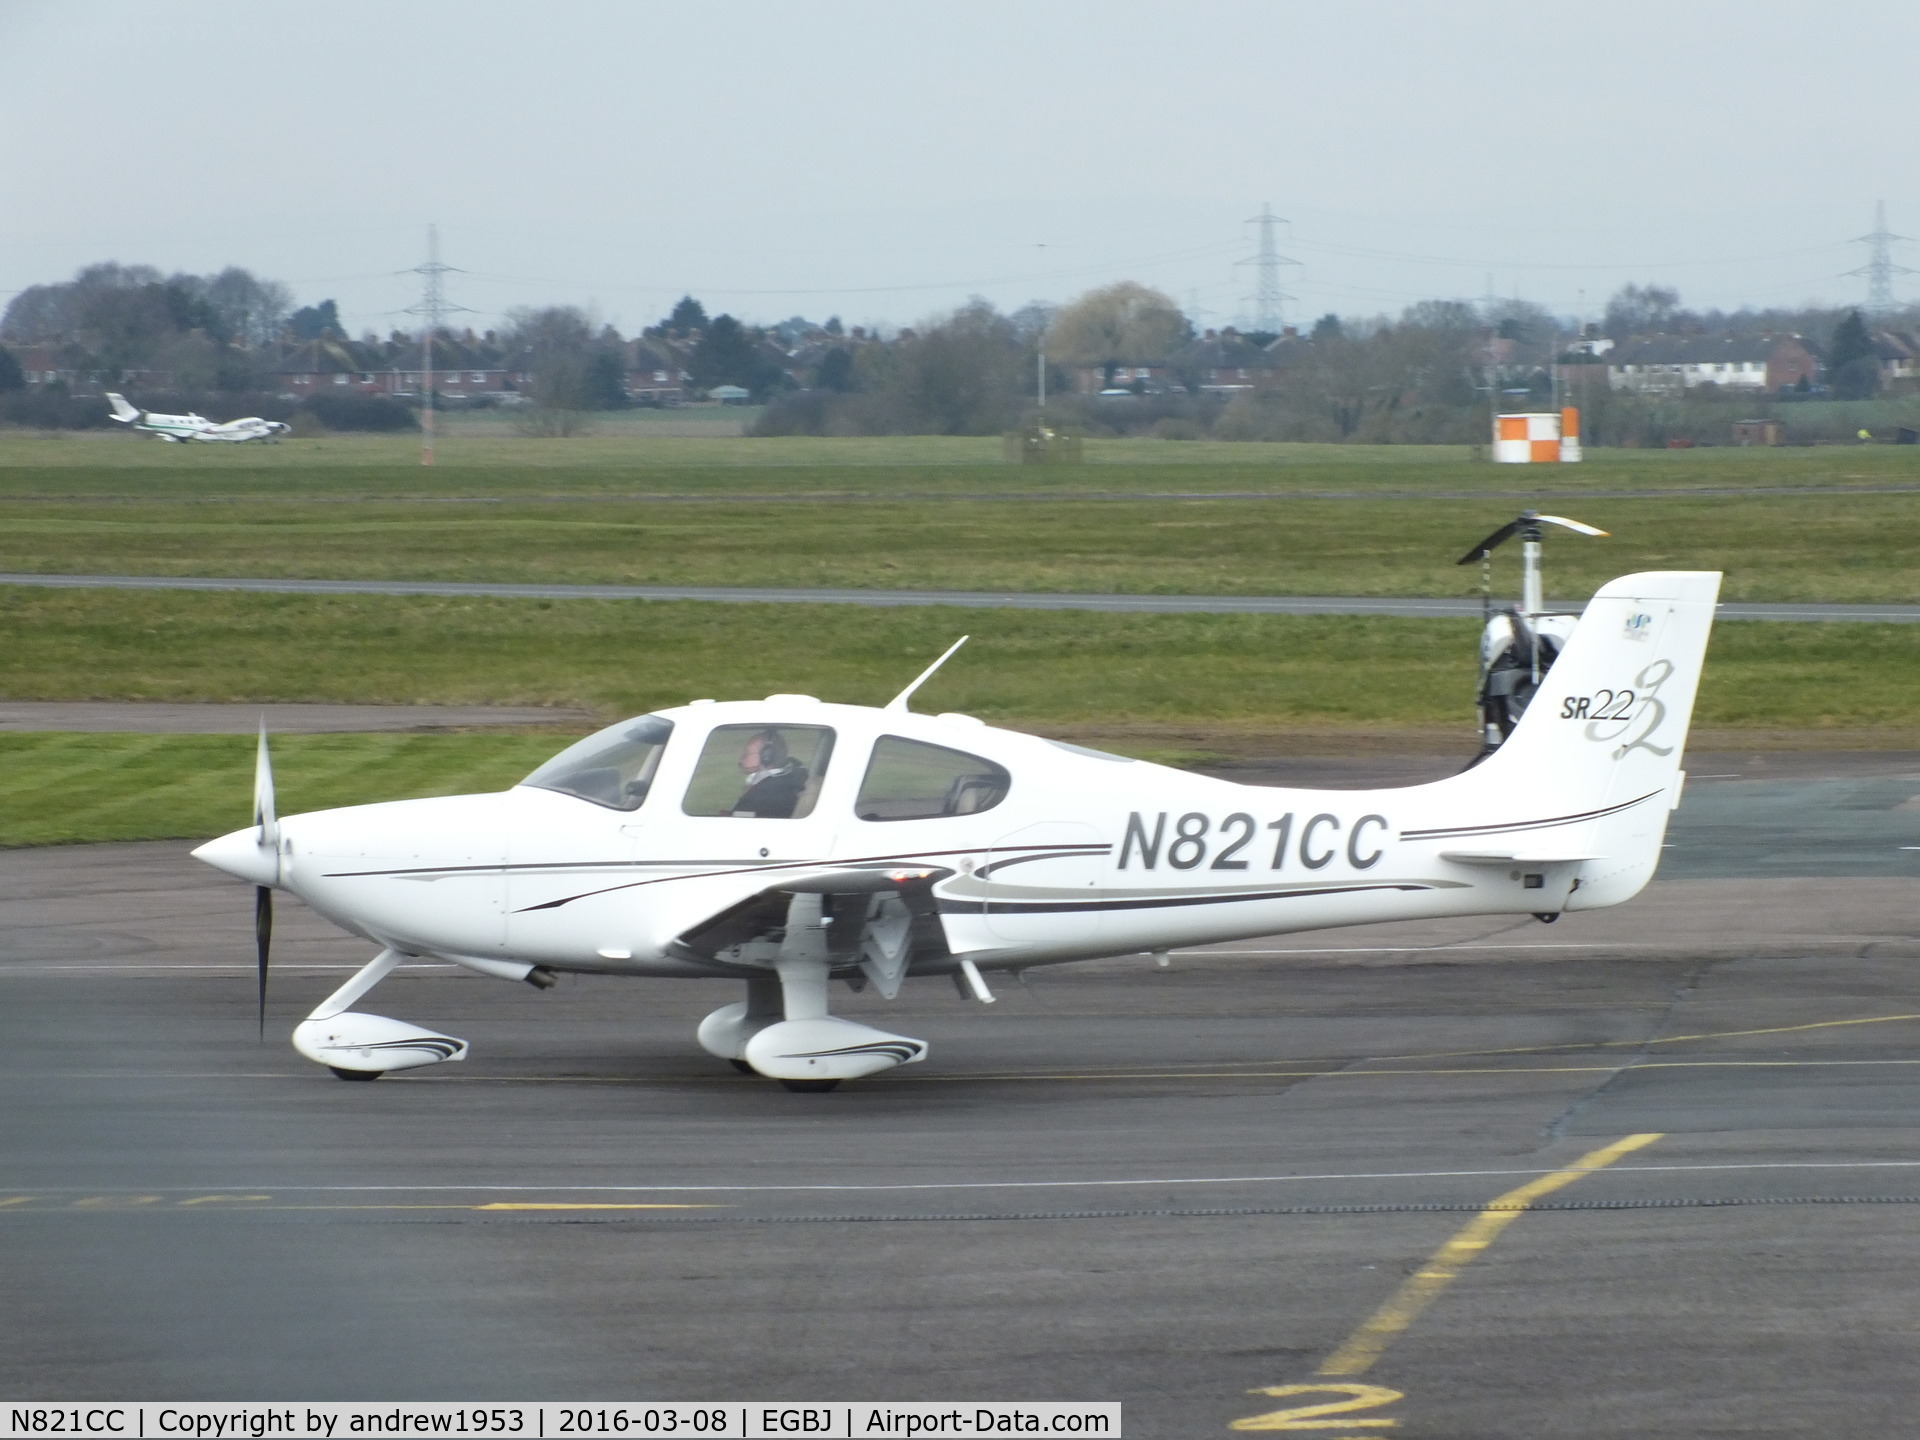 N821CC, 2005 Cirrus SR22 G2 C/N 1427, N821CC at Gloucestershire Airport.